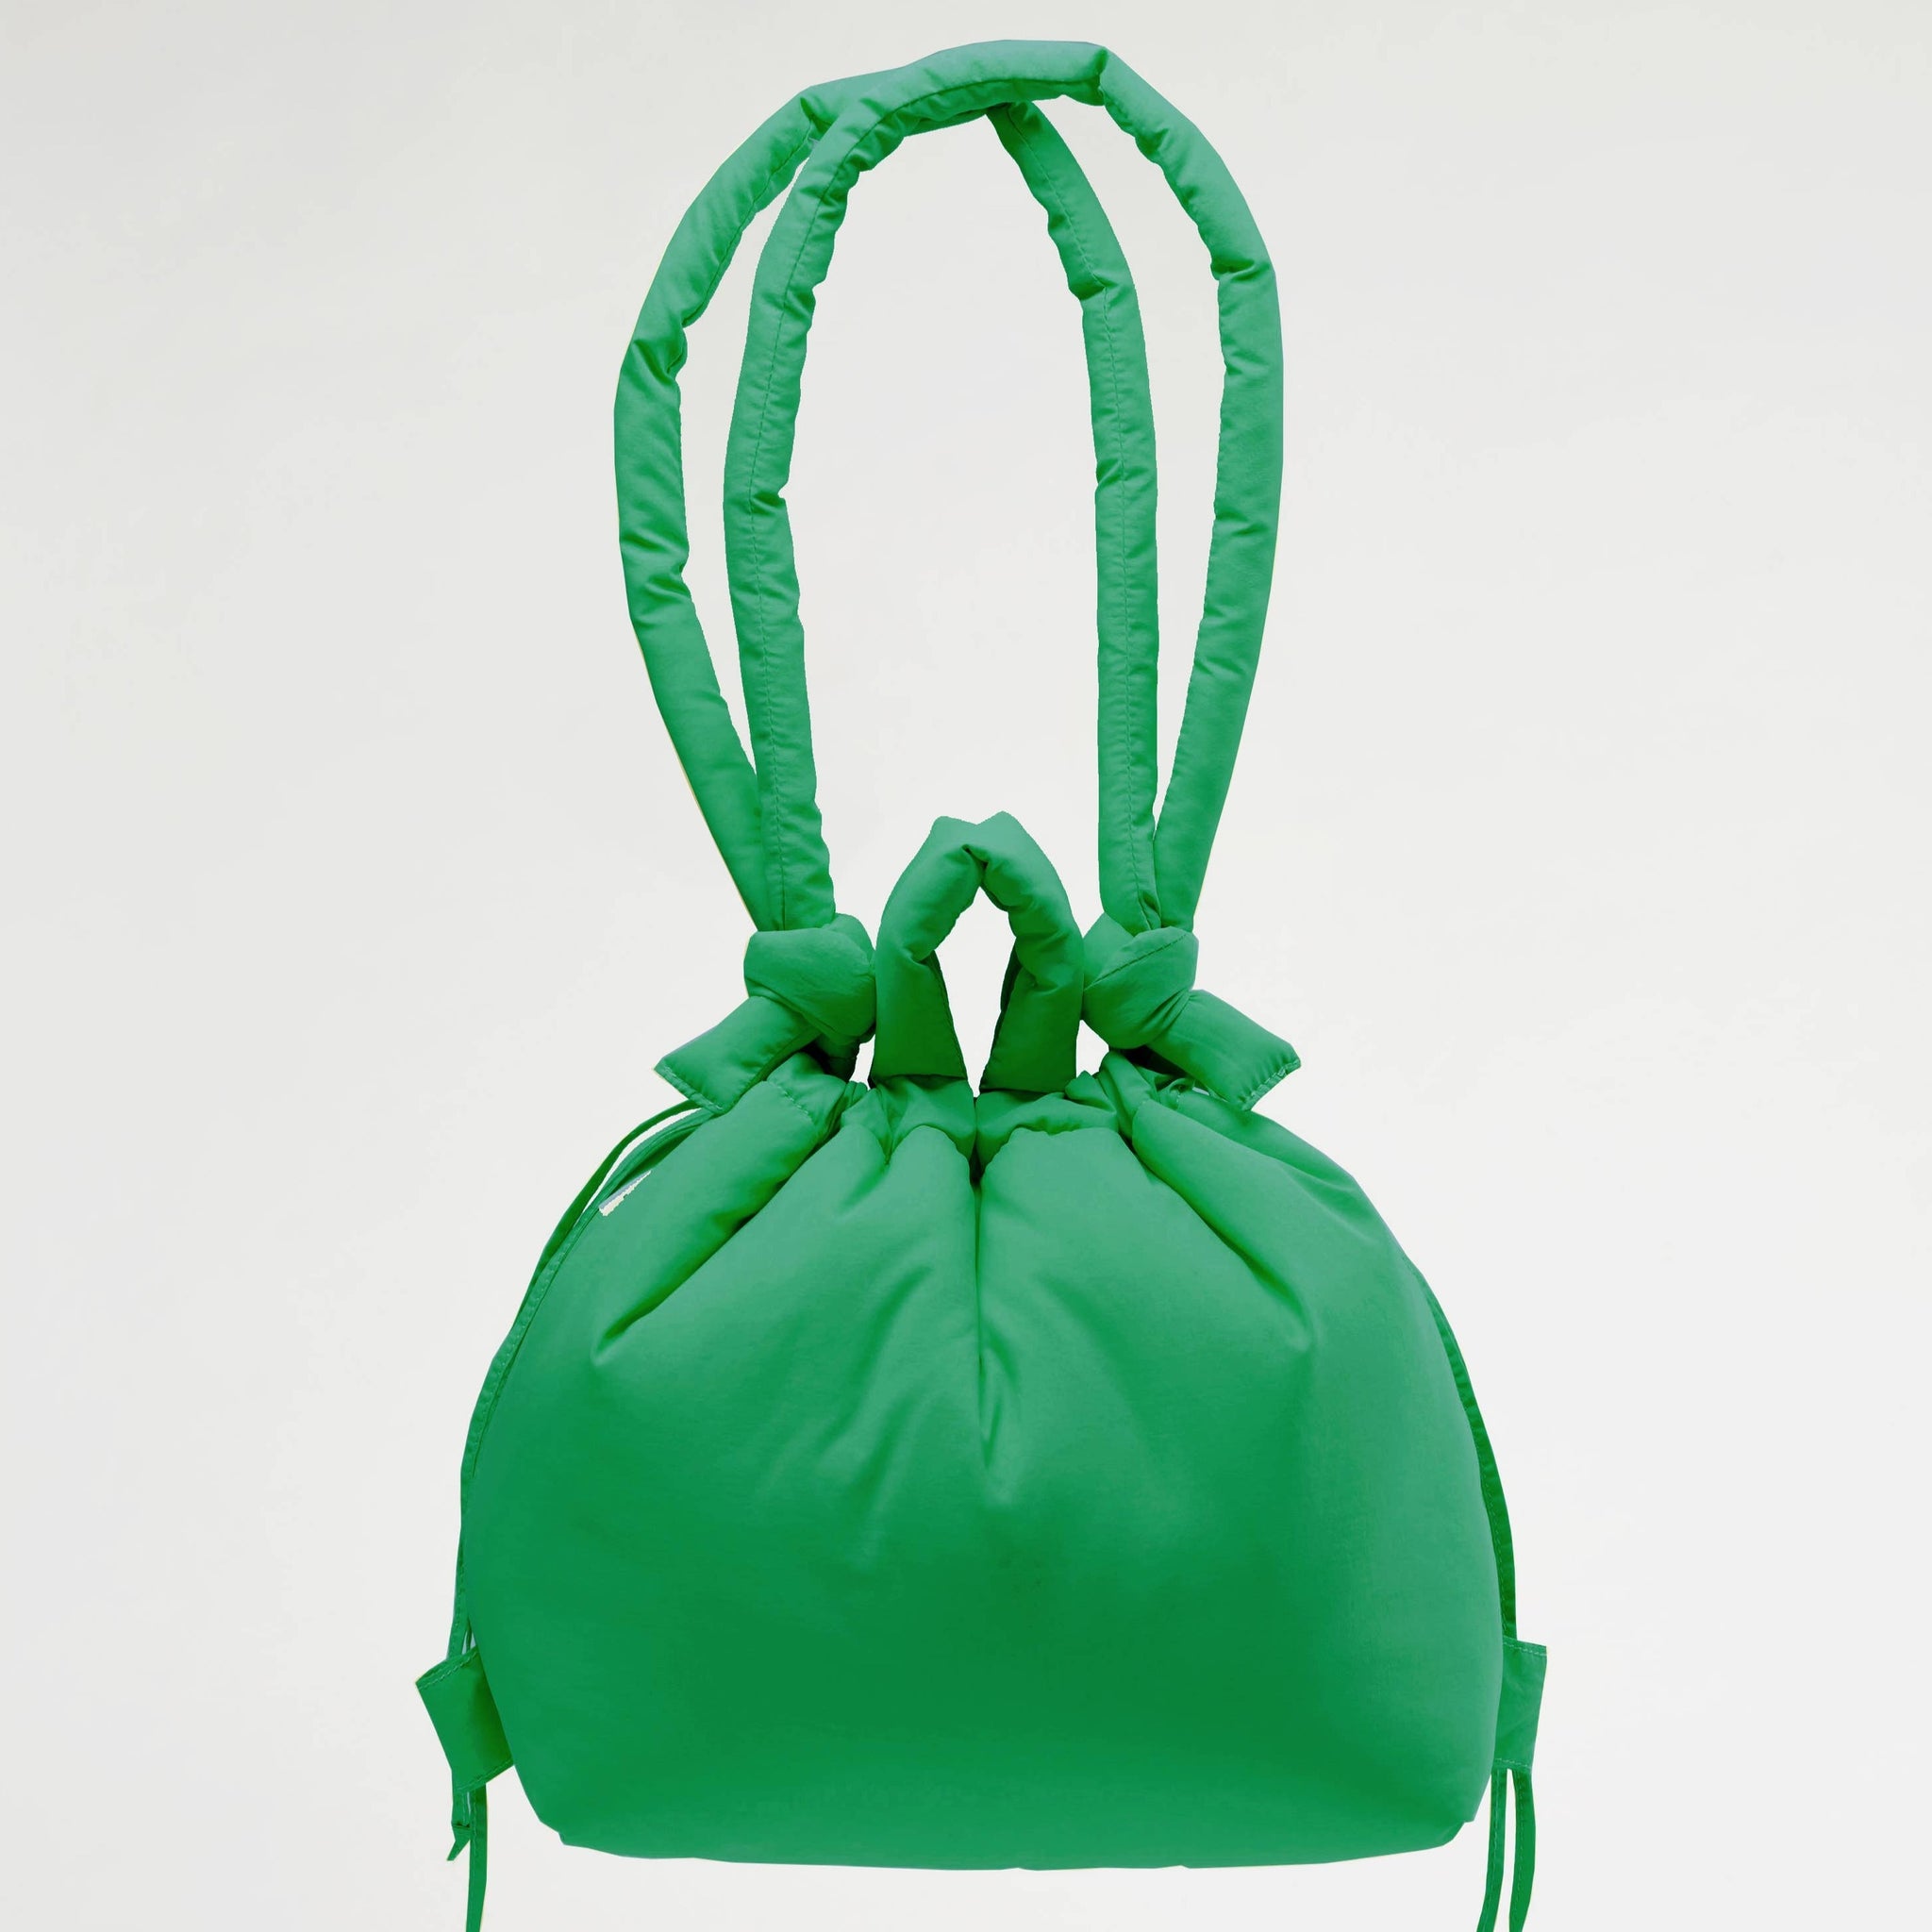 Ona Soft Bag - Green